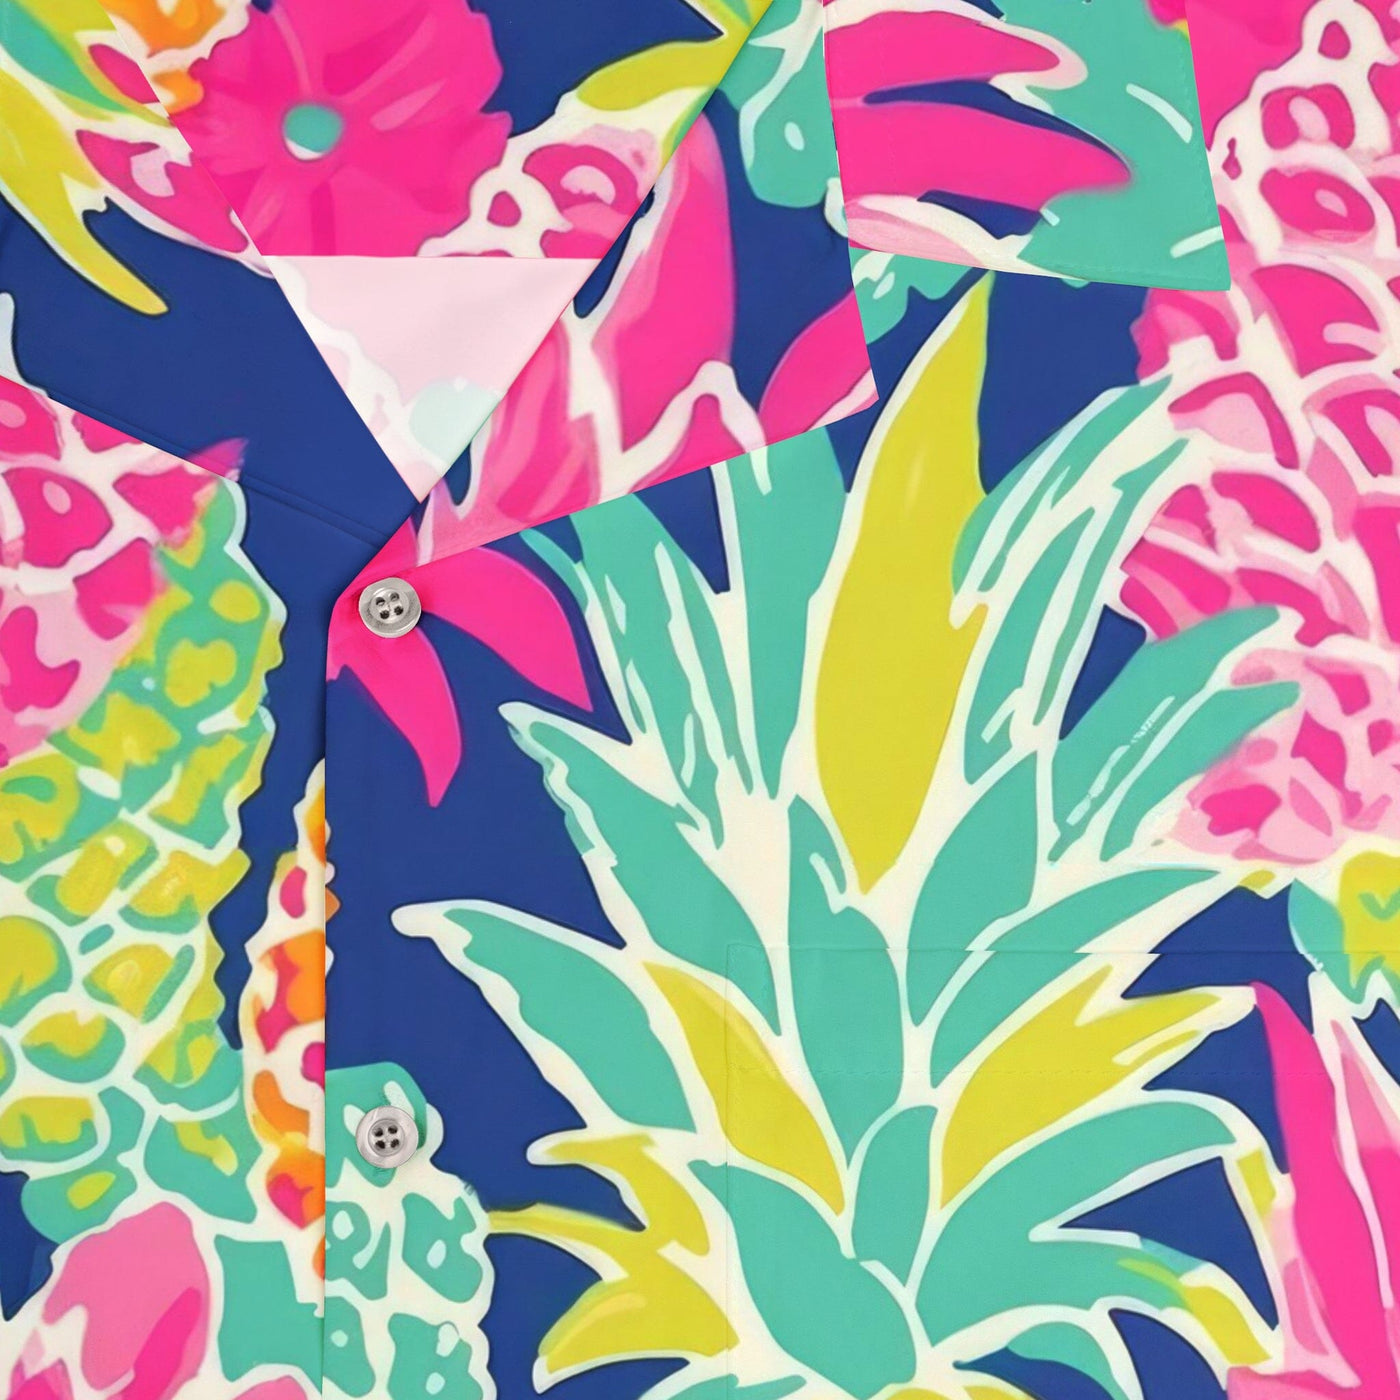 Tropical Delight Short Sleeve - Coastal Cool - Swimwear and Beachwear - Recycled fabrics